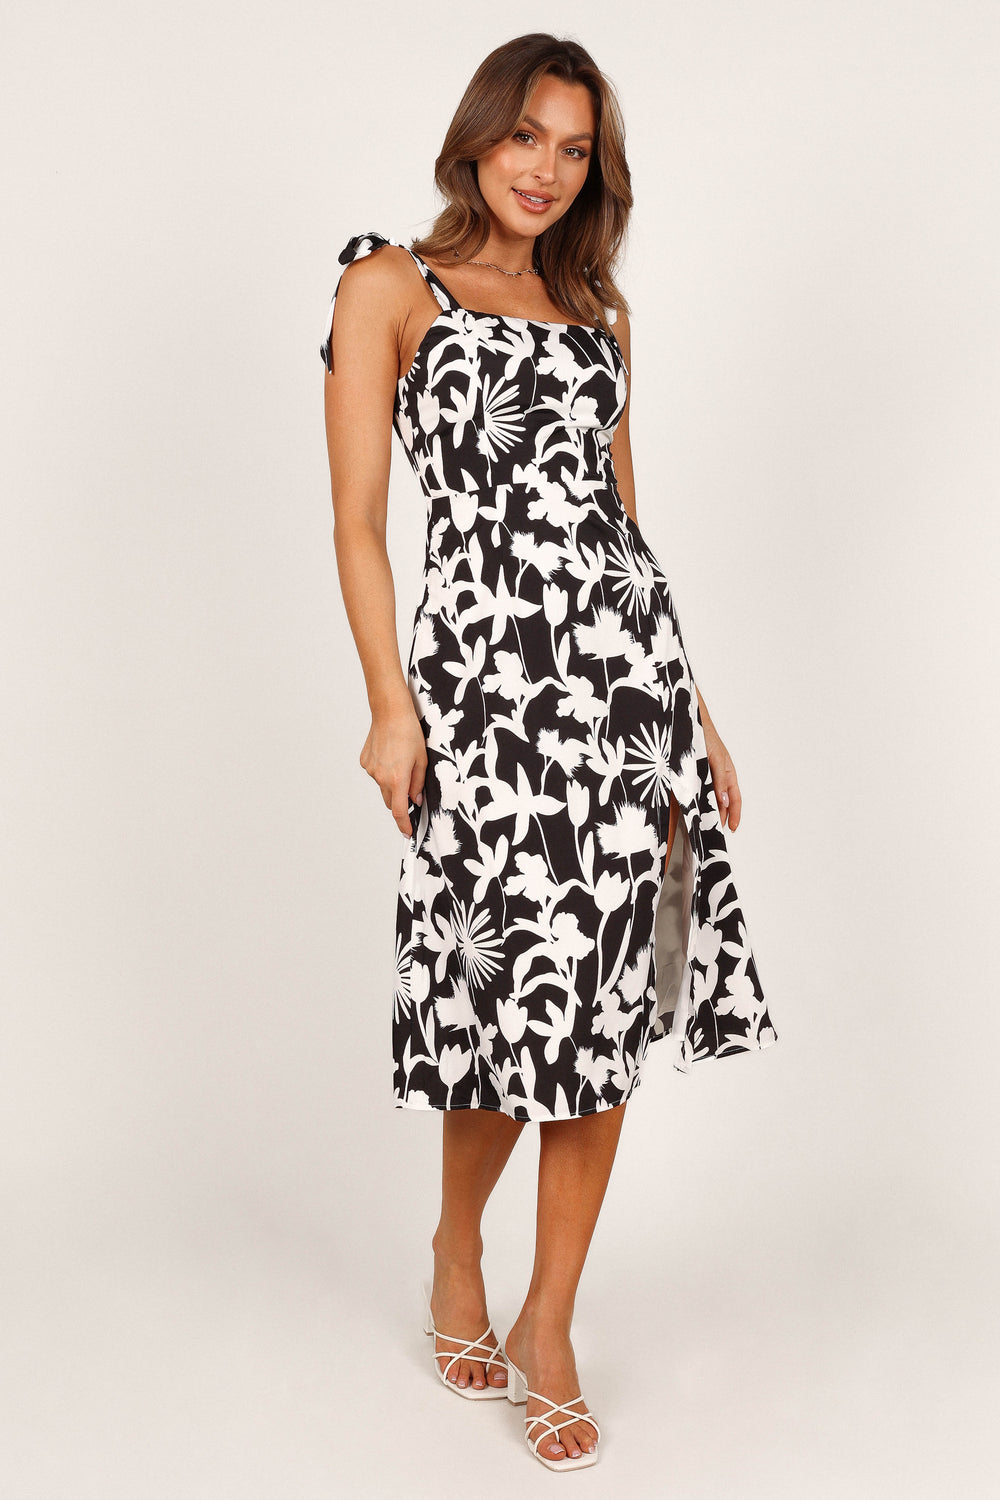 Petal and Pup USA DRESSES Laurel Dress - Black/White